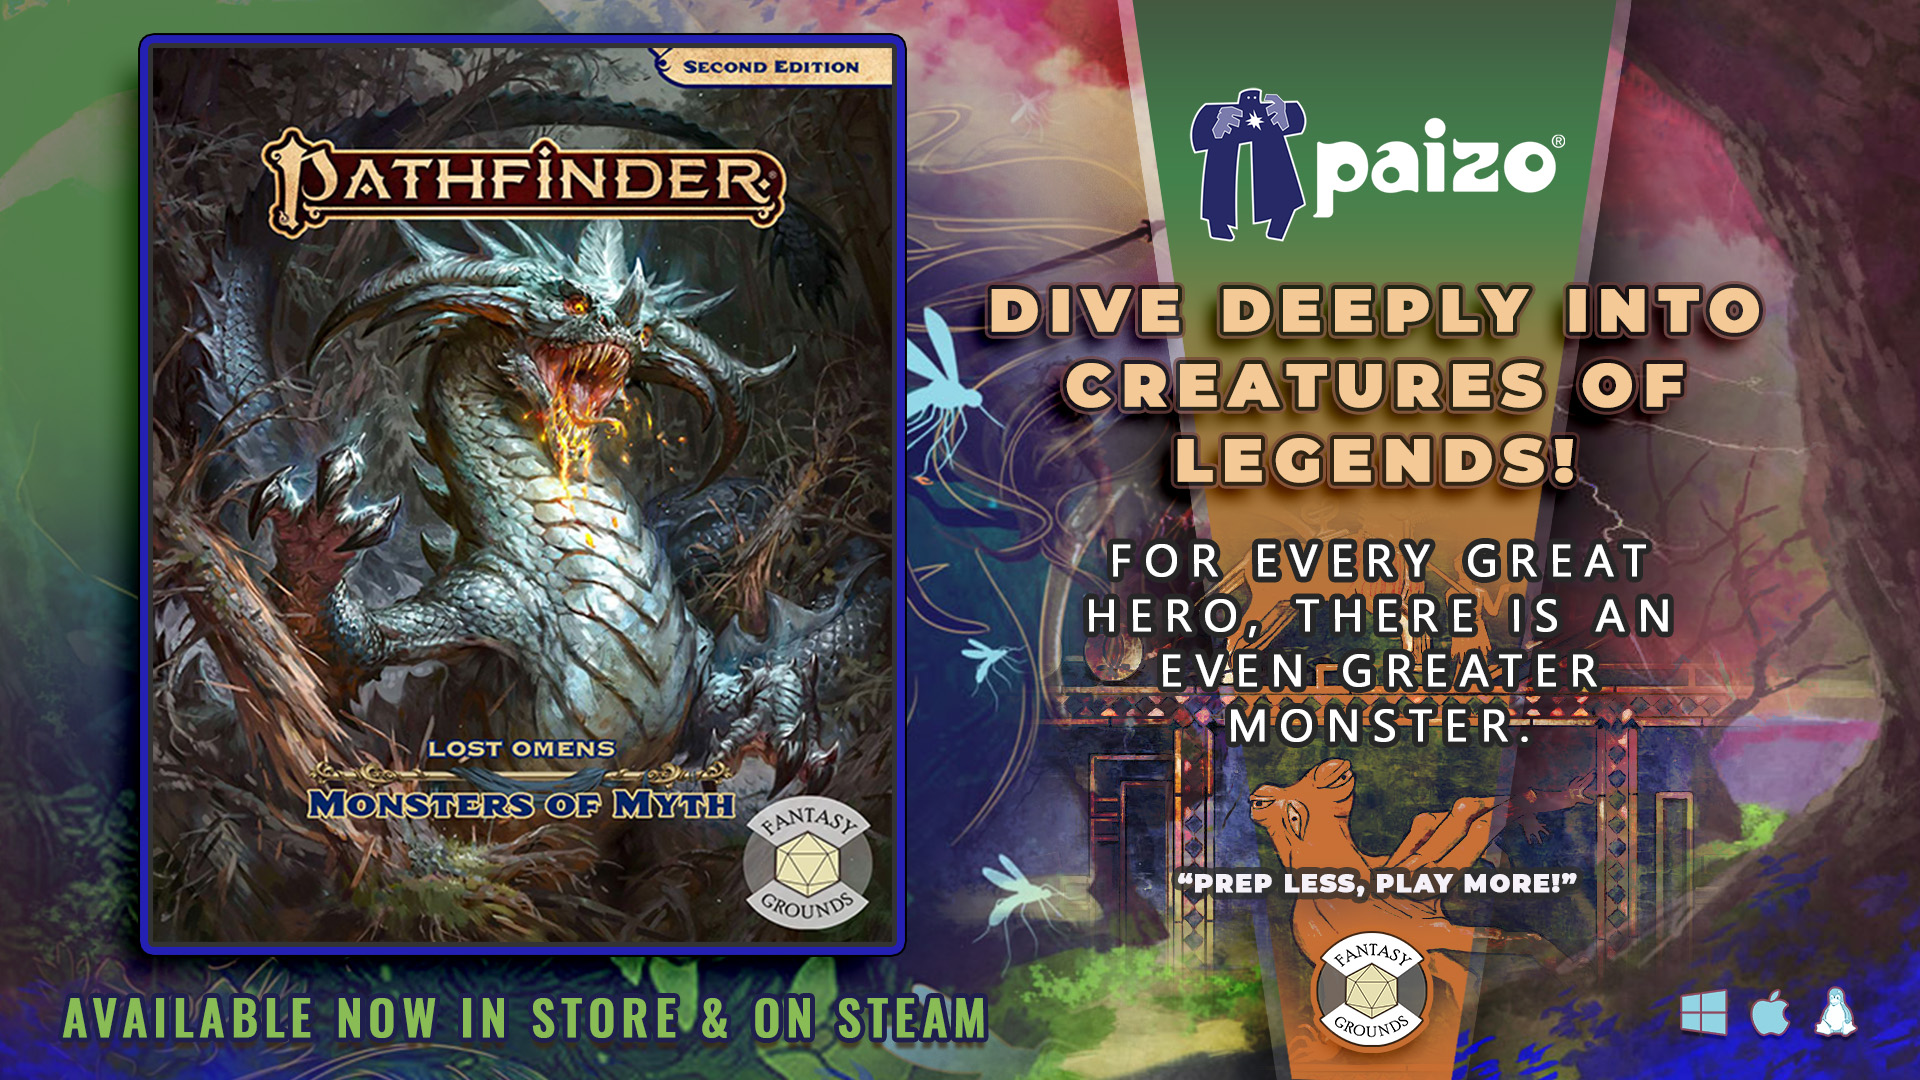 Pathfinder 2 RPG - Lost Omens Monsters of Myth(PZOSMWPZO9311FG).jpg